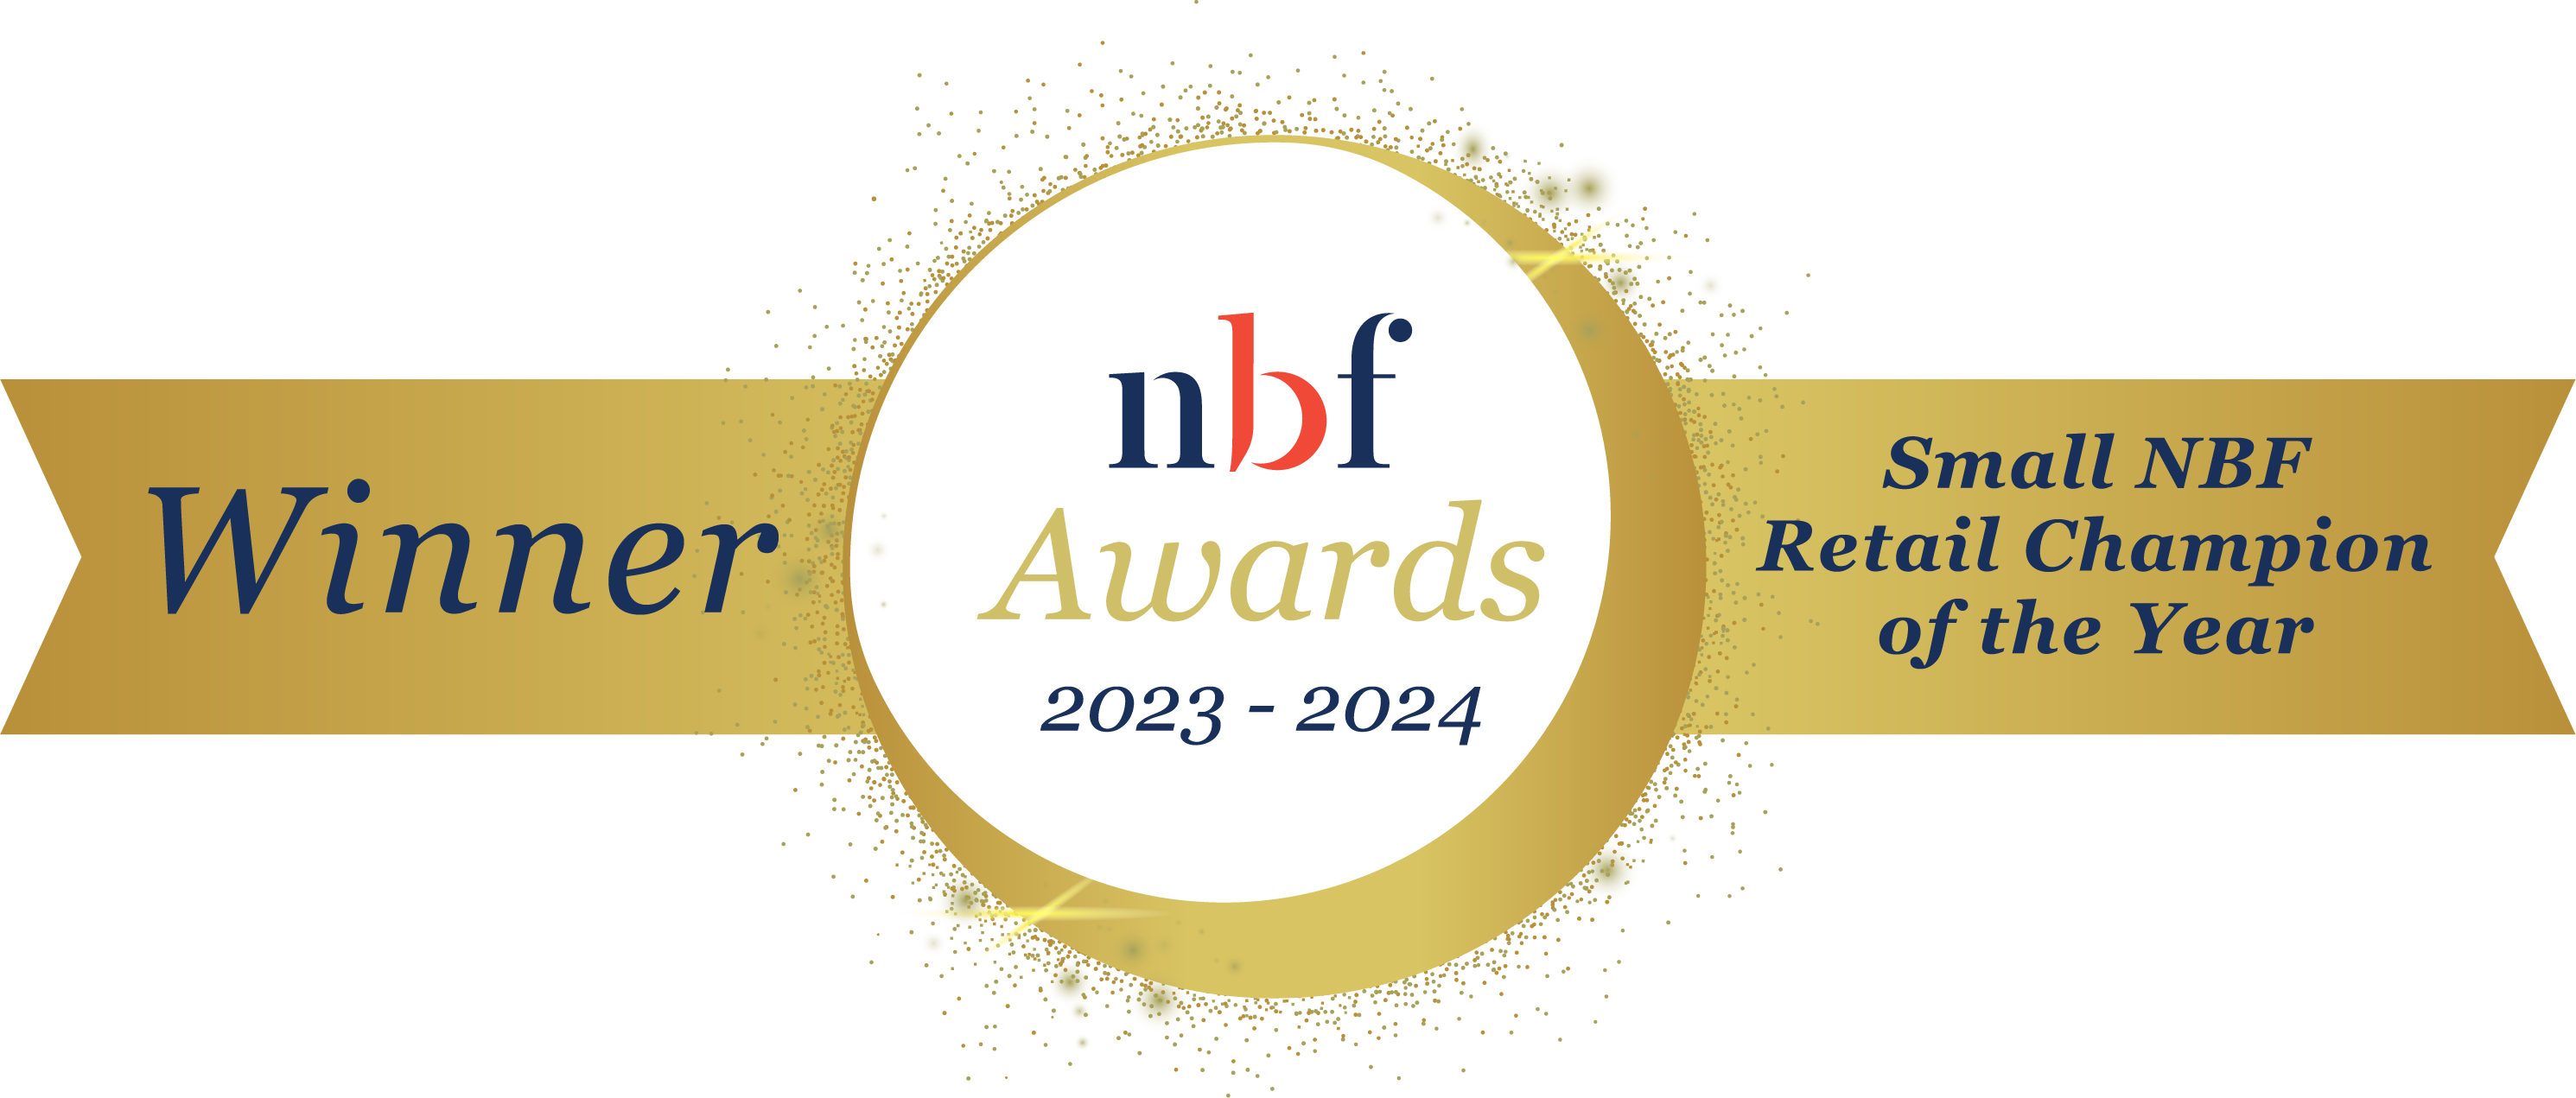 NBF Award 2023